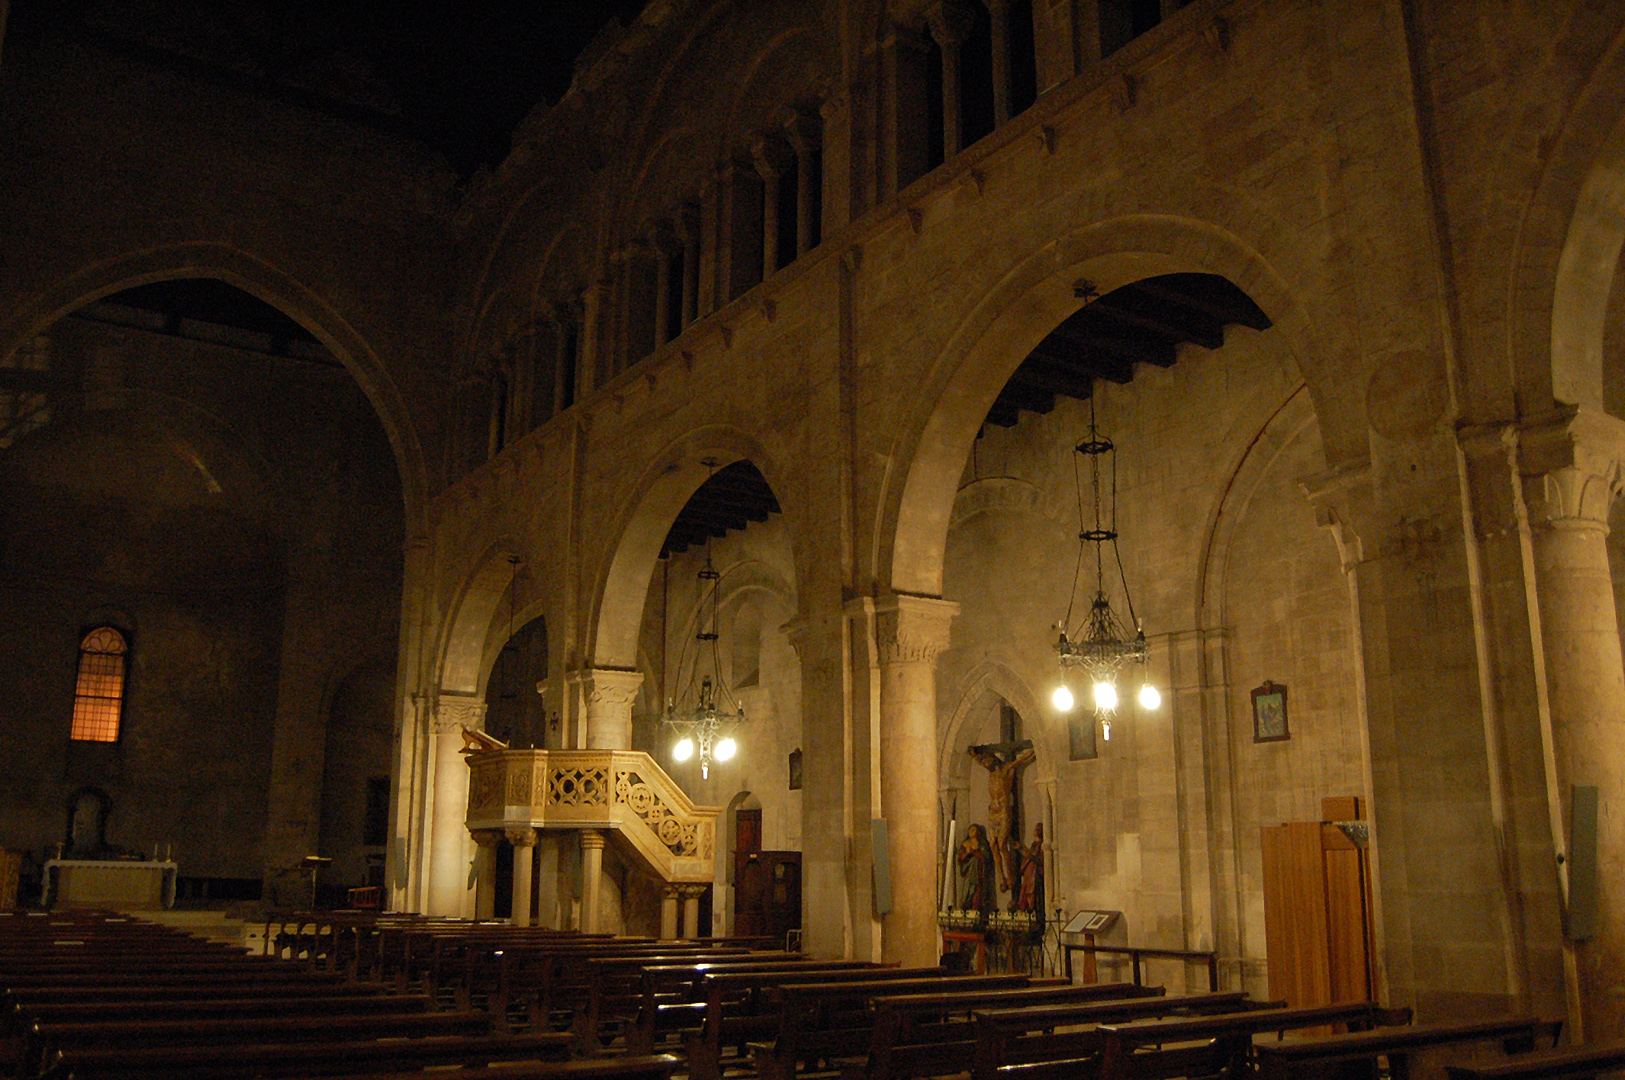 Kathedraal van Conversano (Apuli, Itali); Conversano Cathedral (Apulia, Italy)